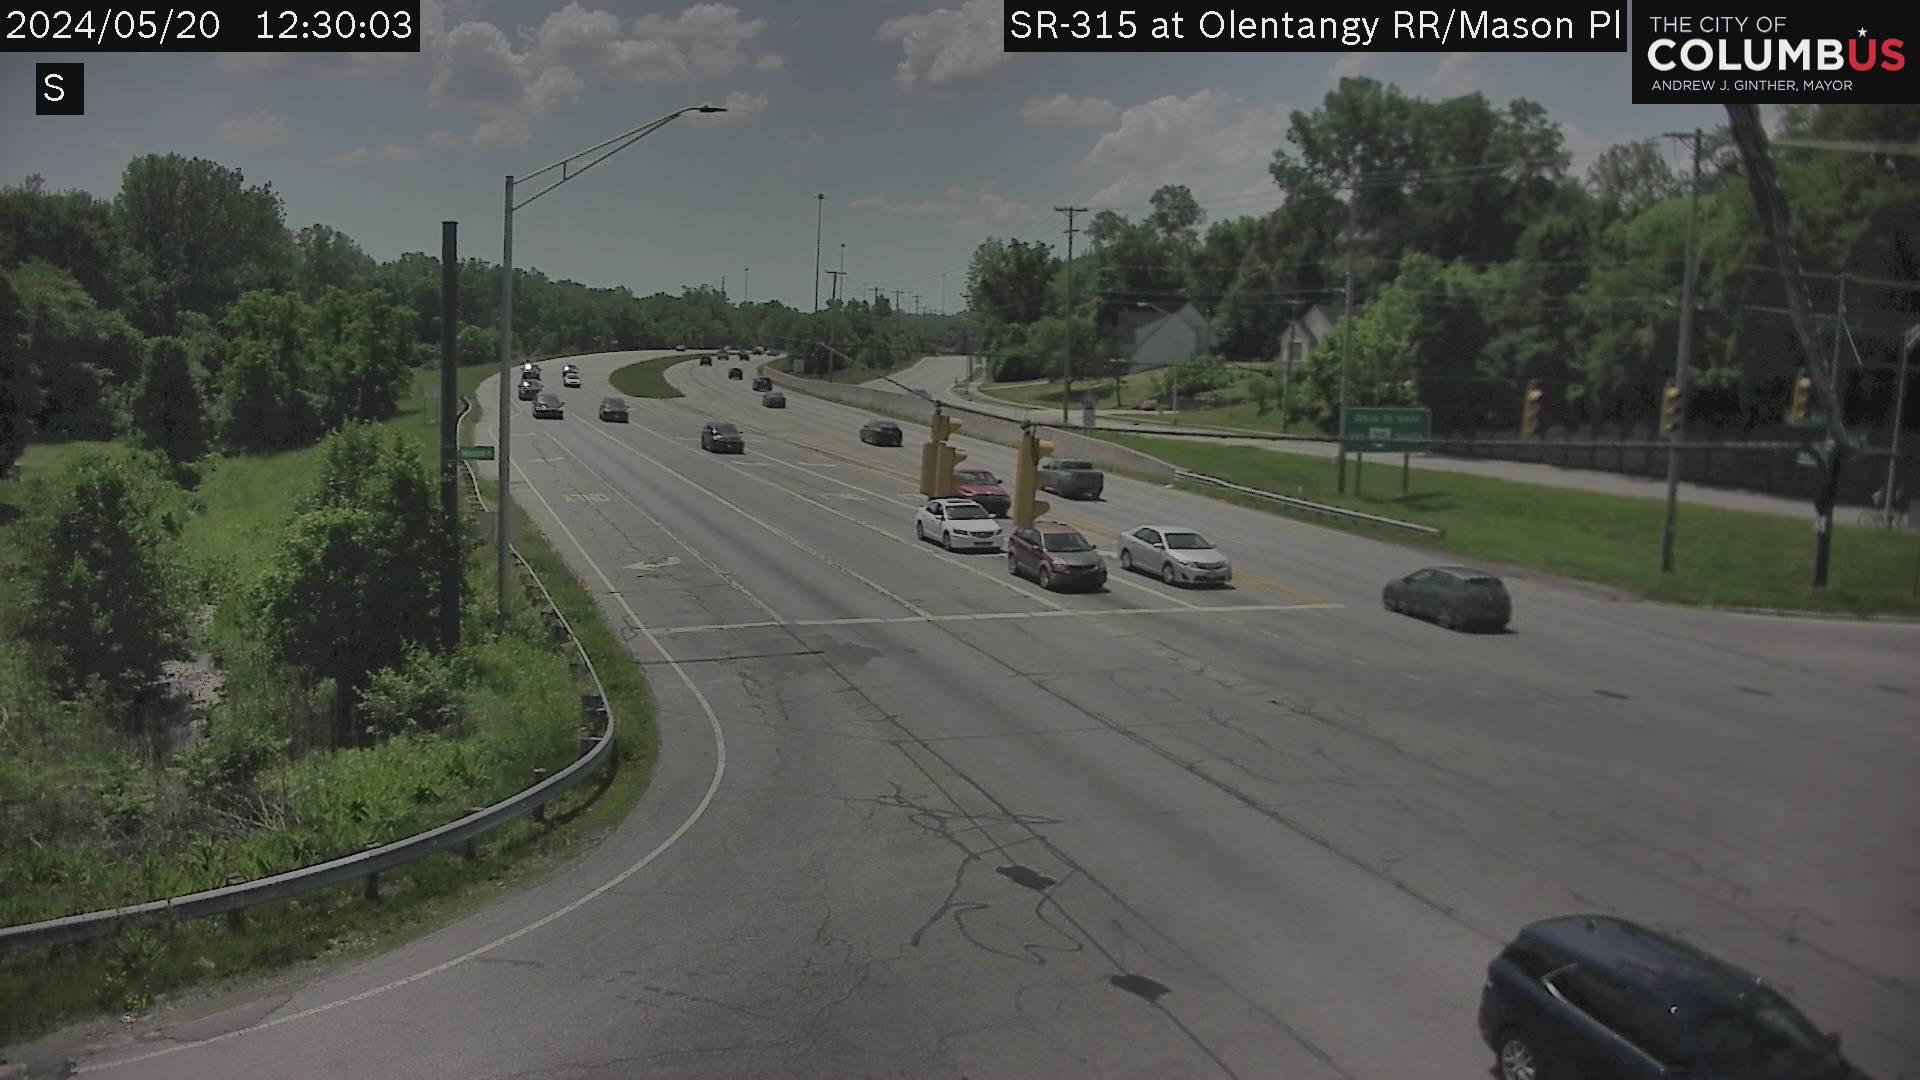 Worthington Hills: City of Columbus) Olentangy River Rd at Mason Pl and SR-315 Traffic Camera